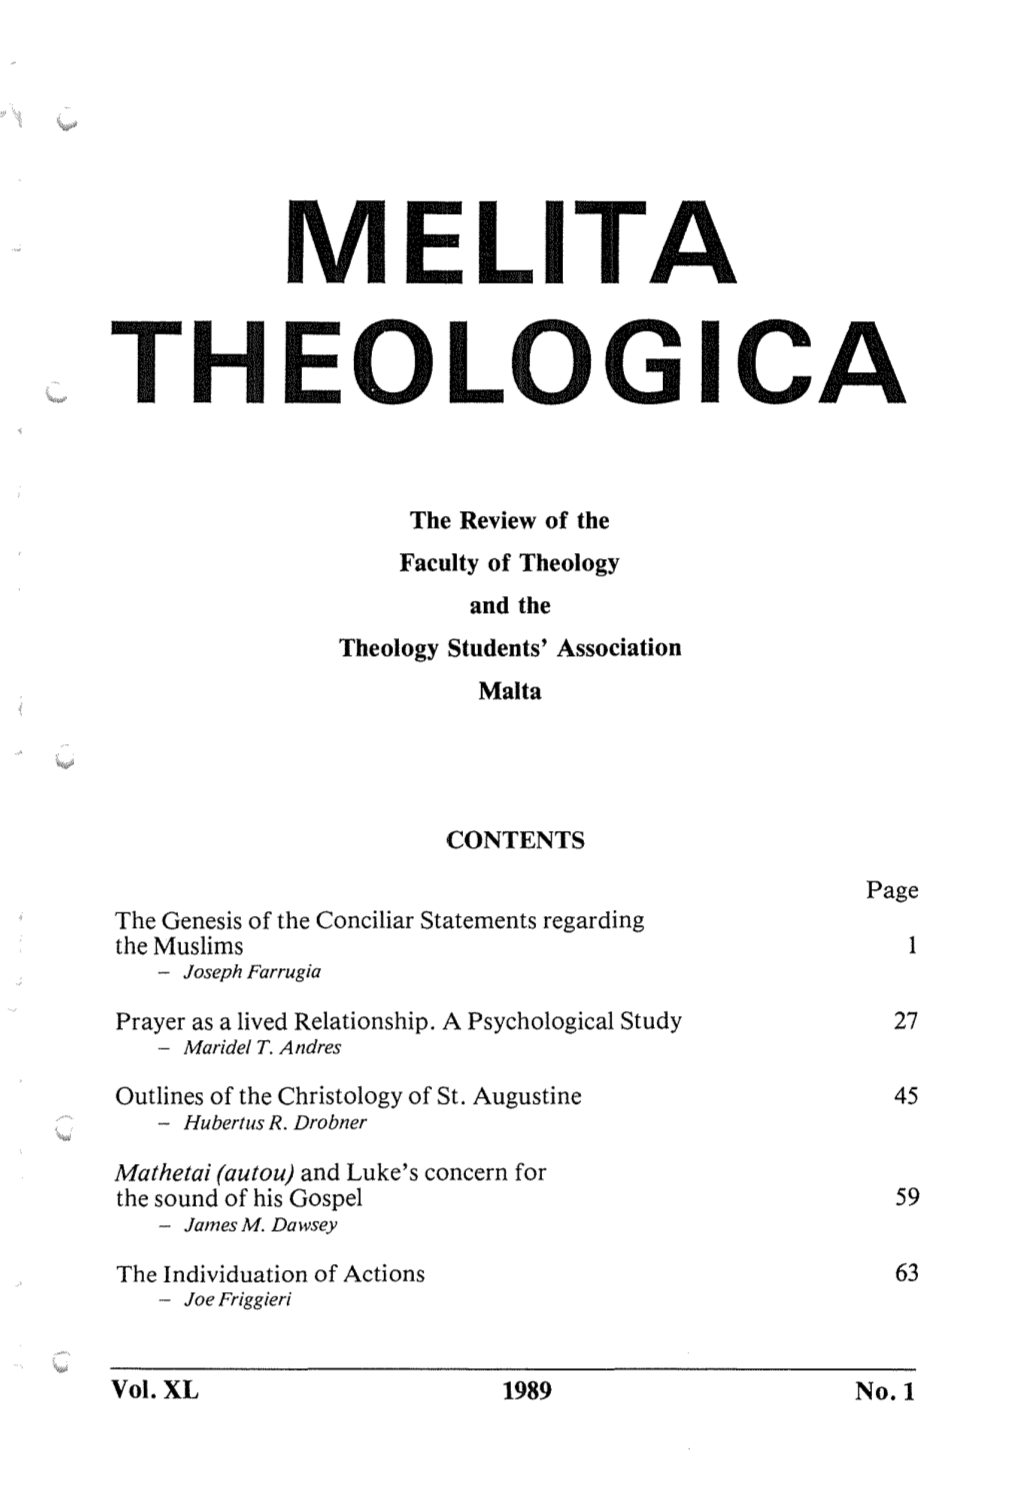 Melita Theologica